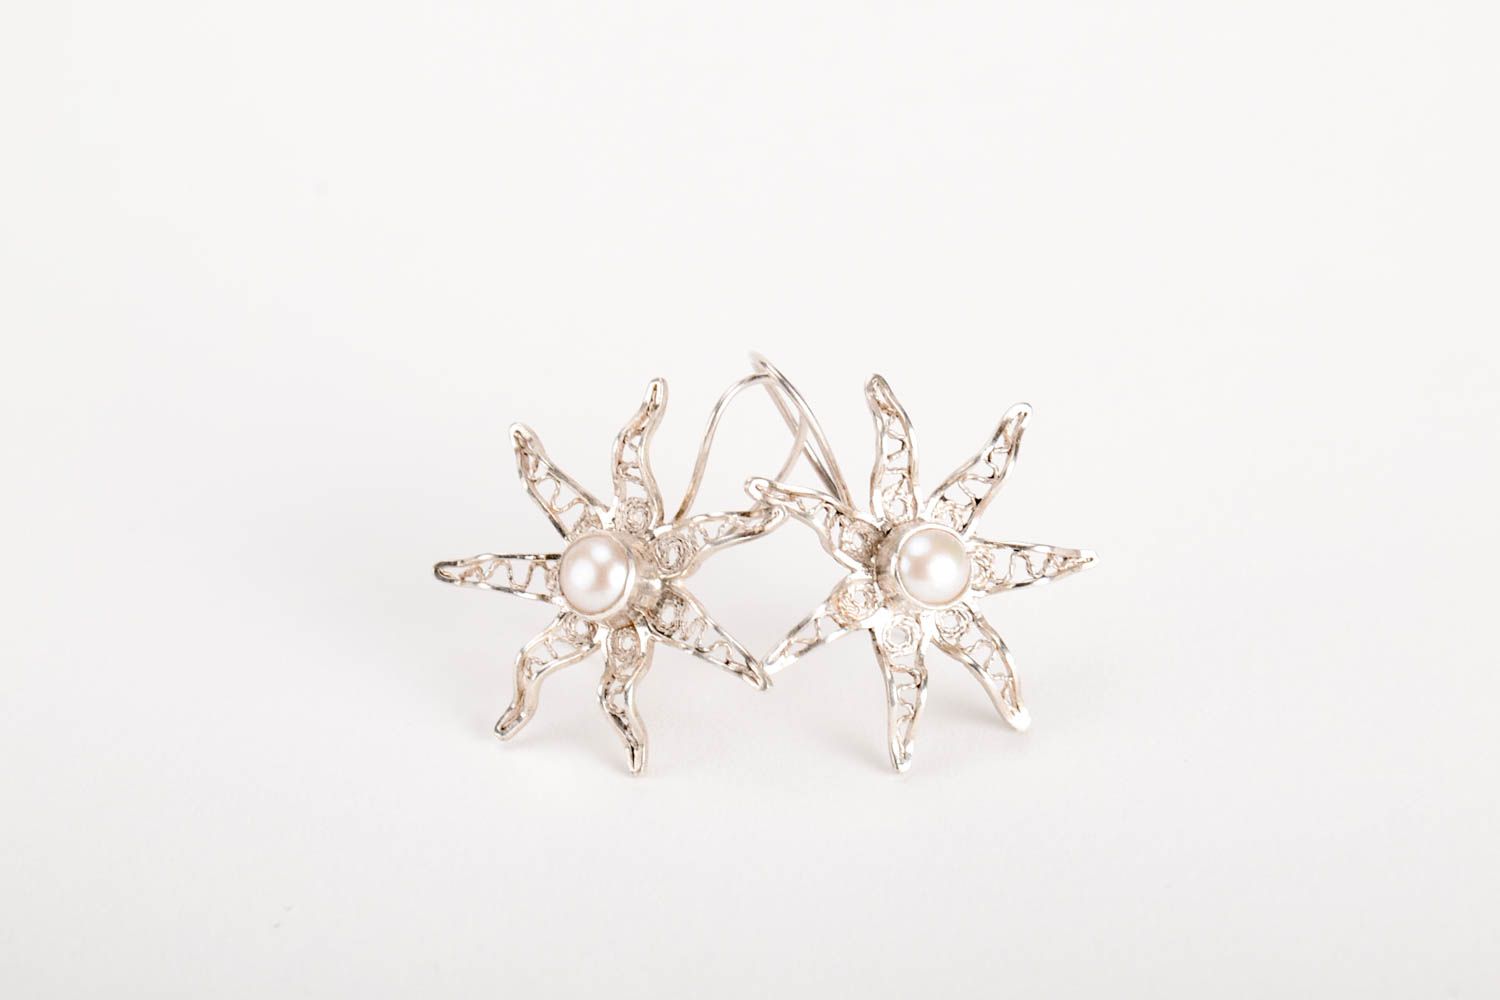 Handmade silver earrings designer earrings silver accessories for women photo 4